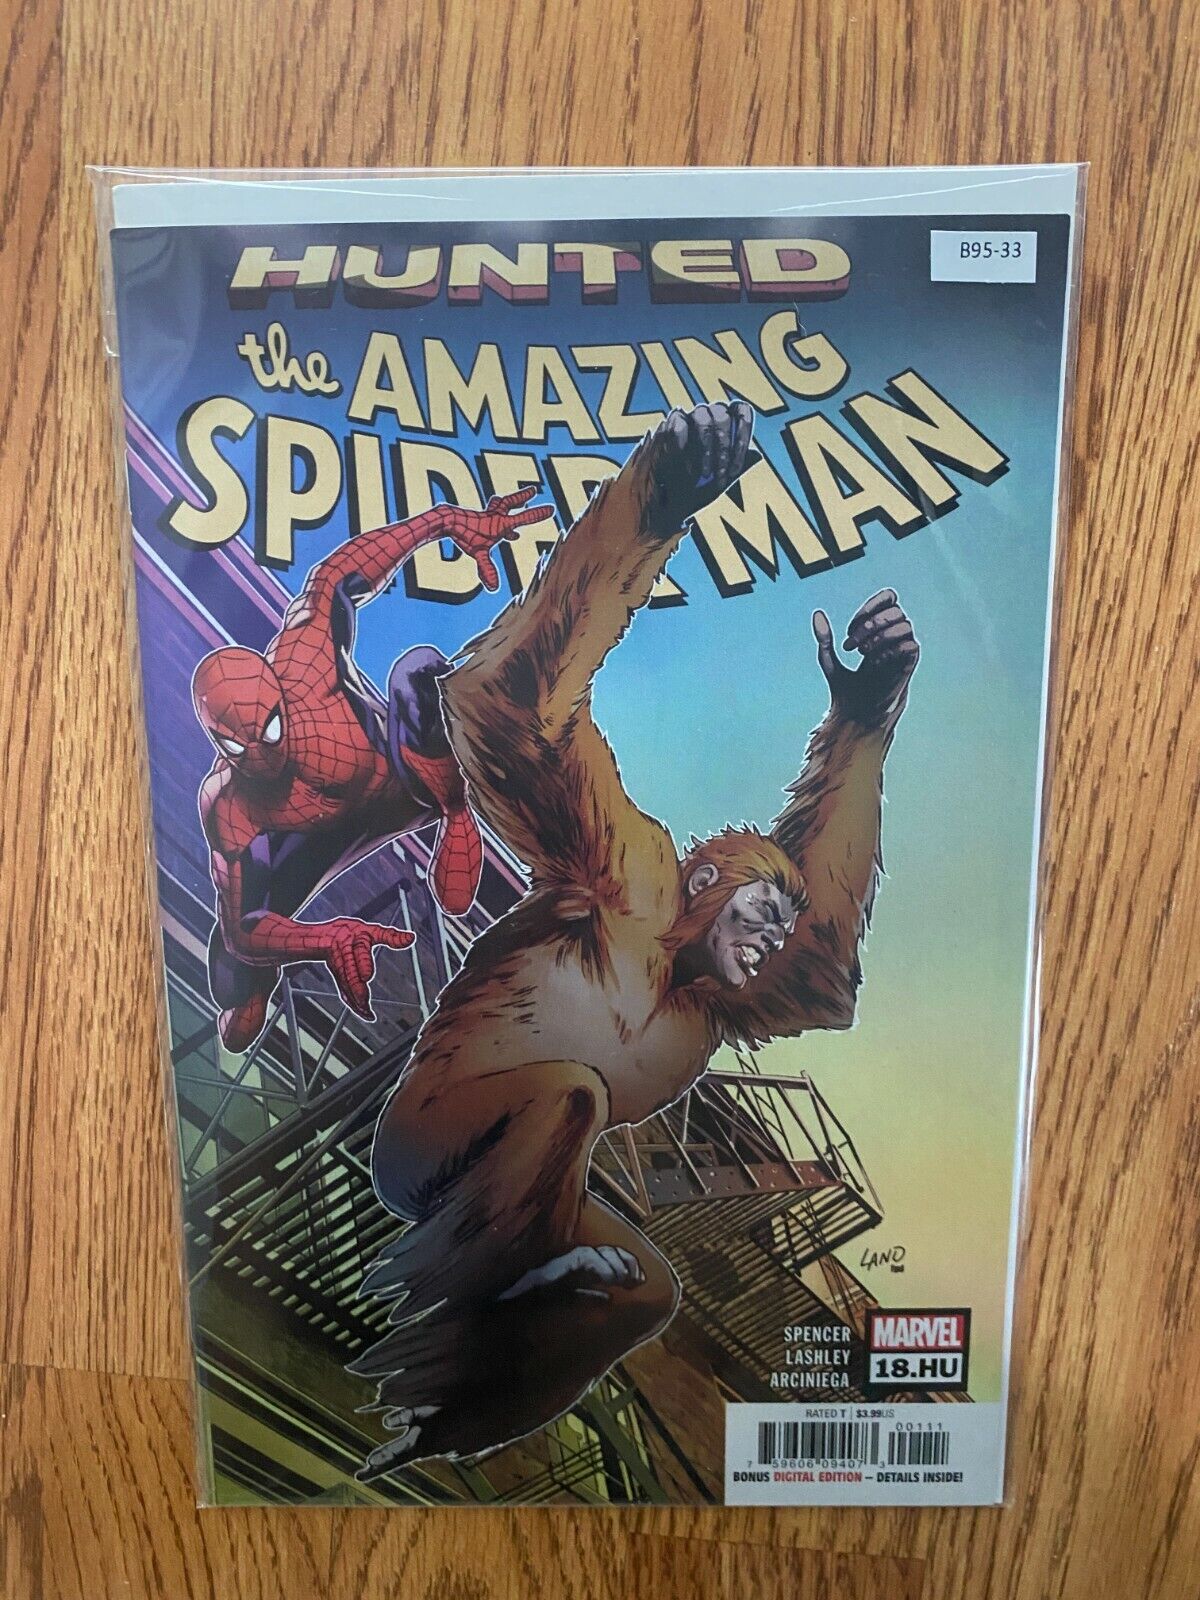 Amazing Spider-Man vol.5 #18.HU 2019 High Grade 9.6 Marvel Comic Book B95-33